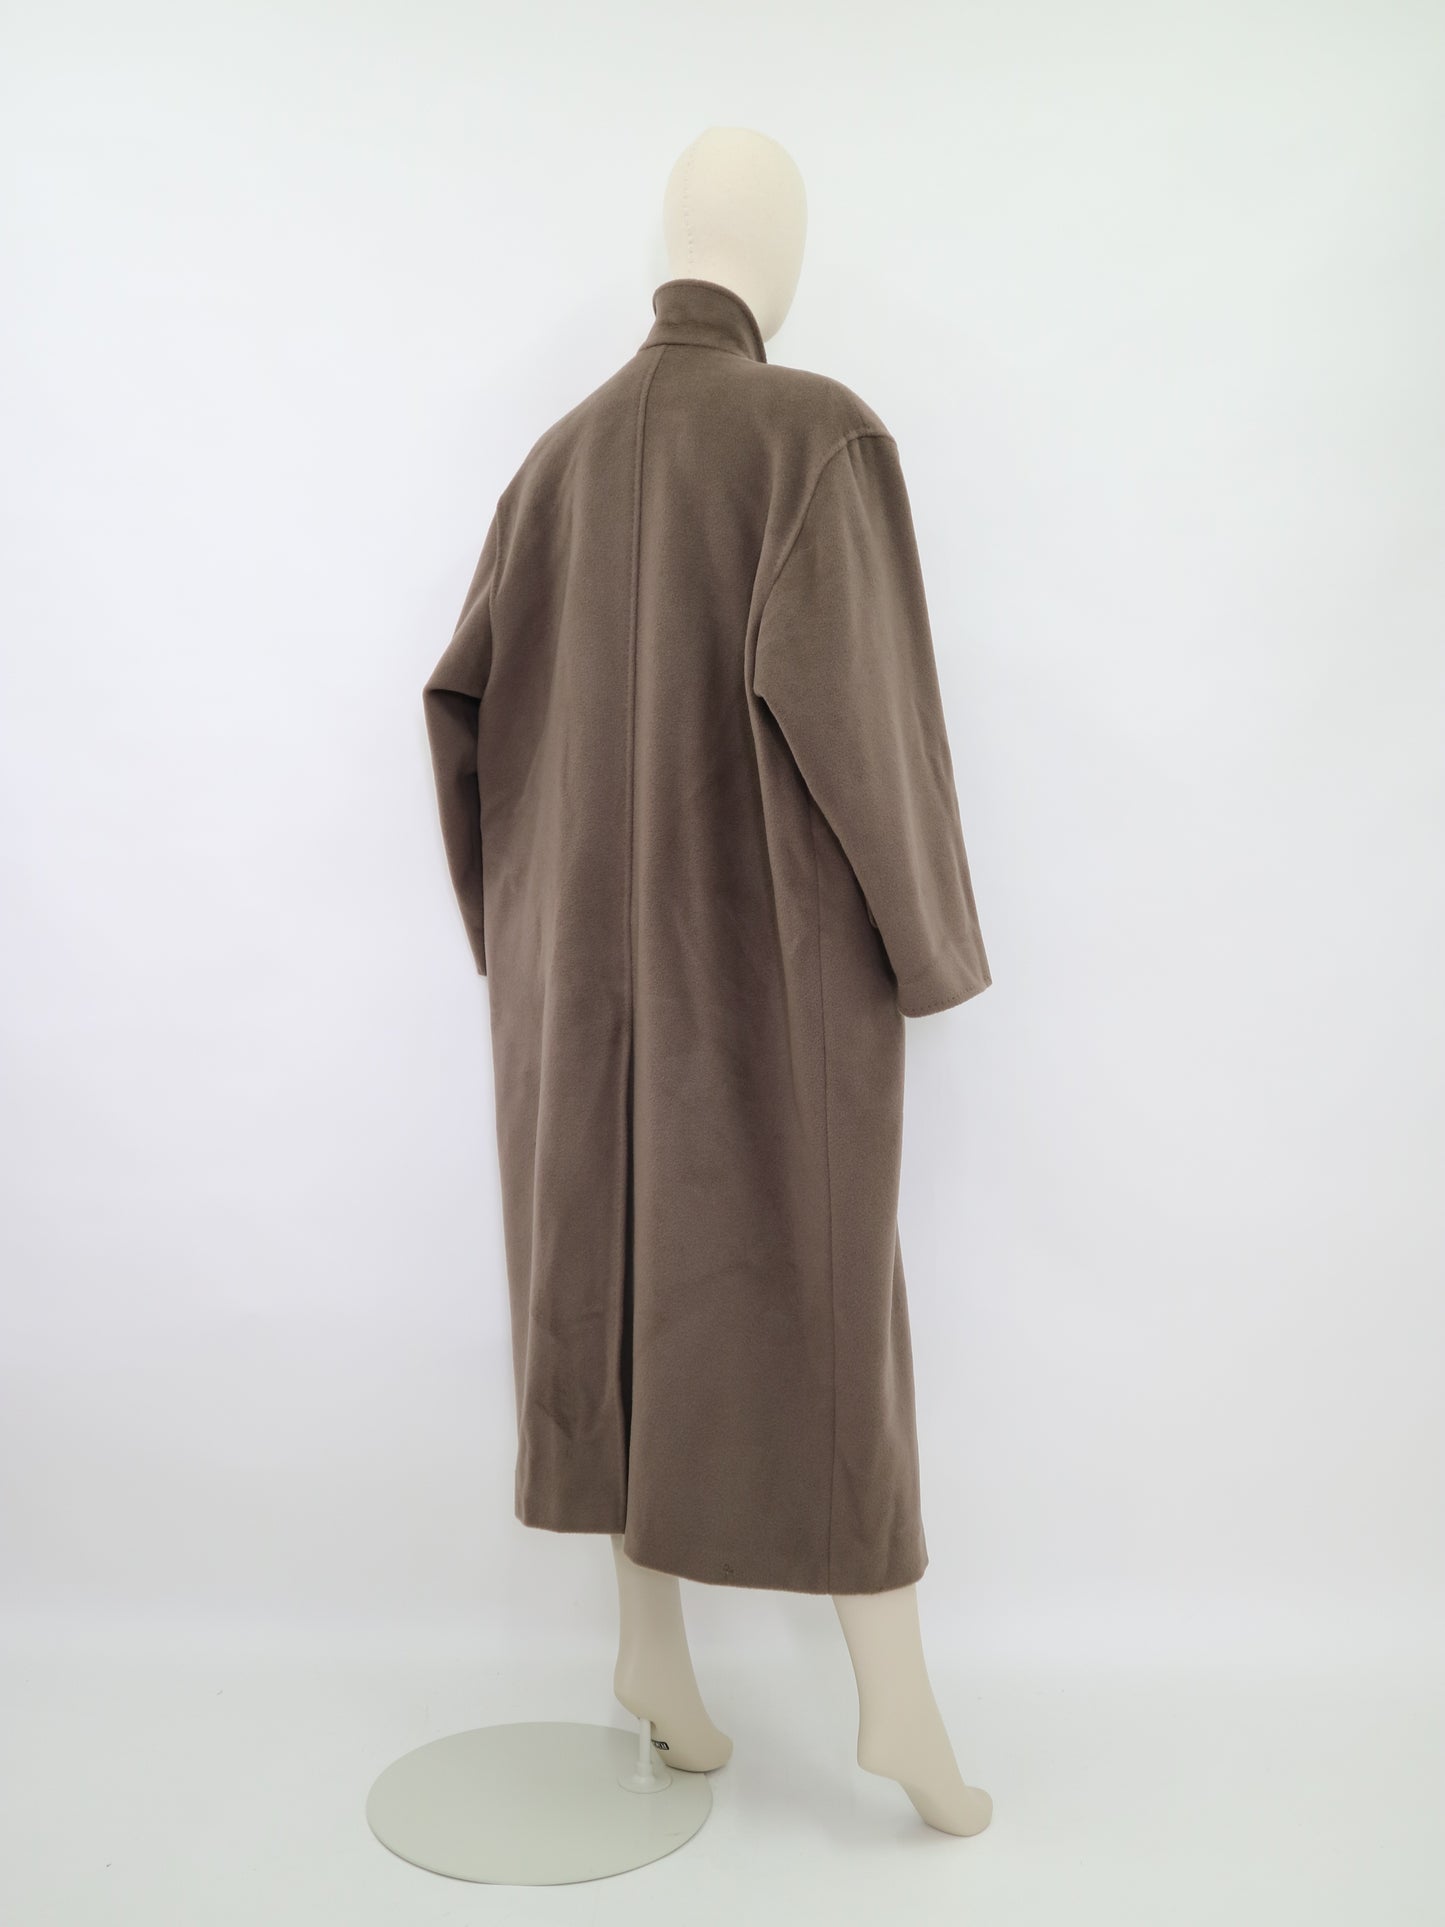 Max Mara Authentic Vintage Oversized Coat